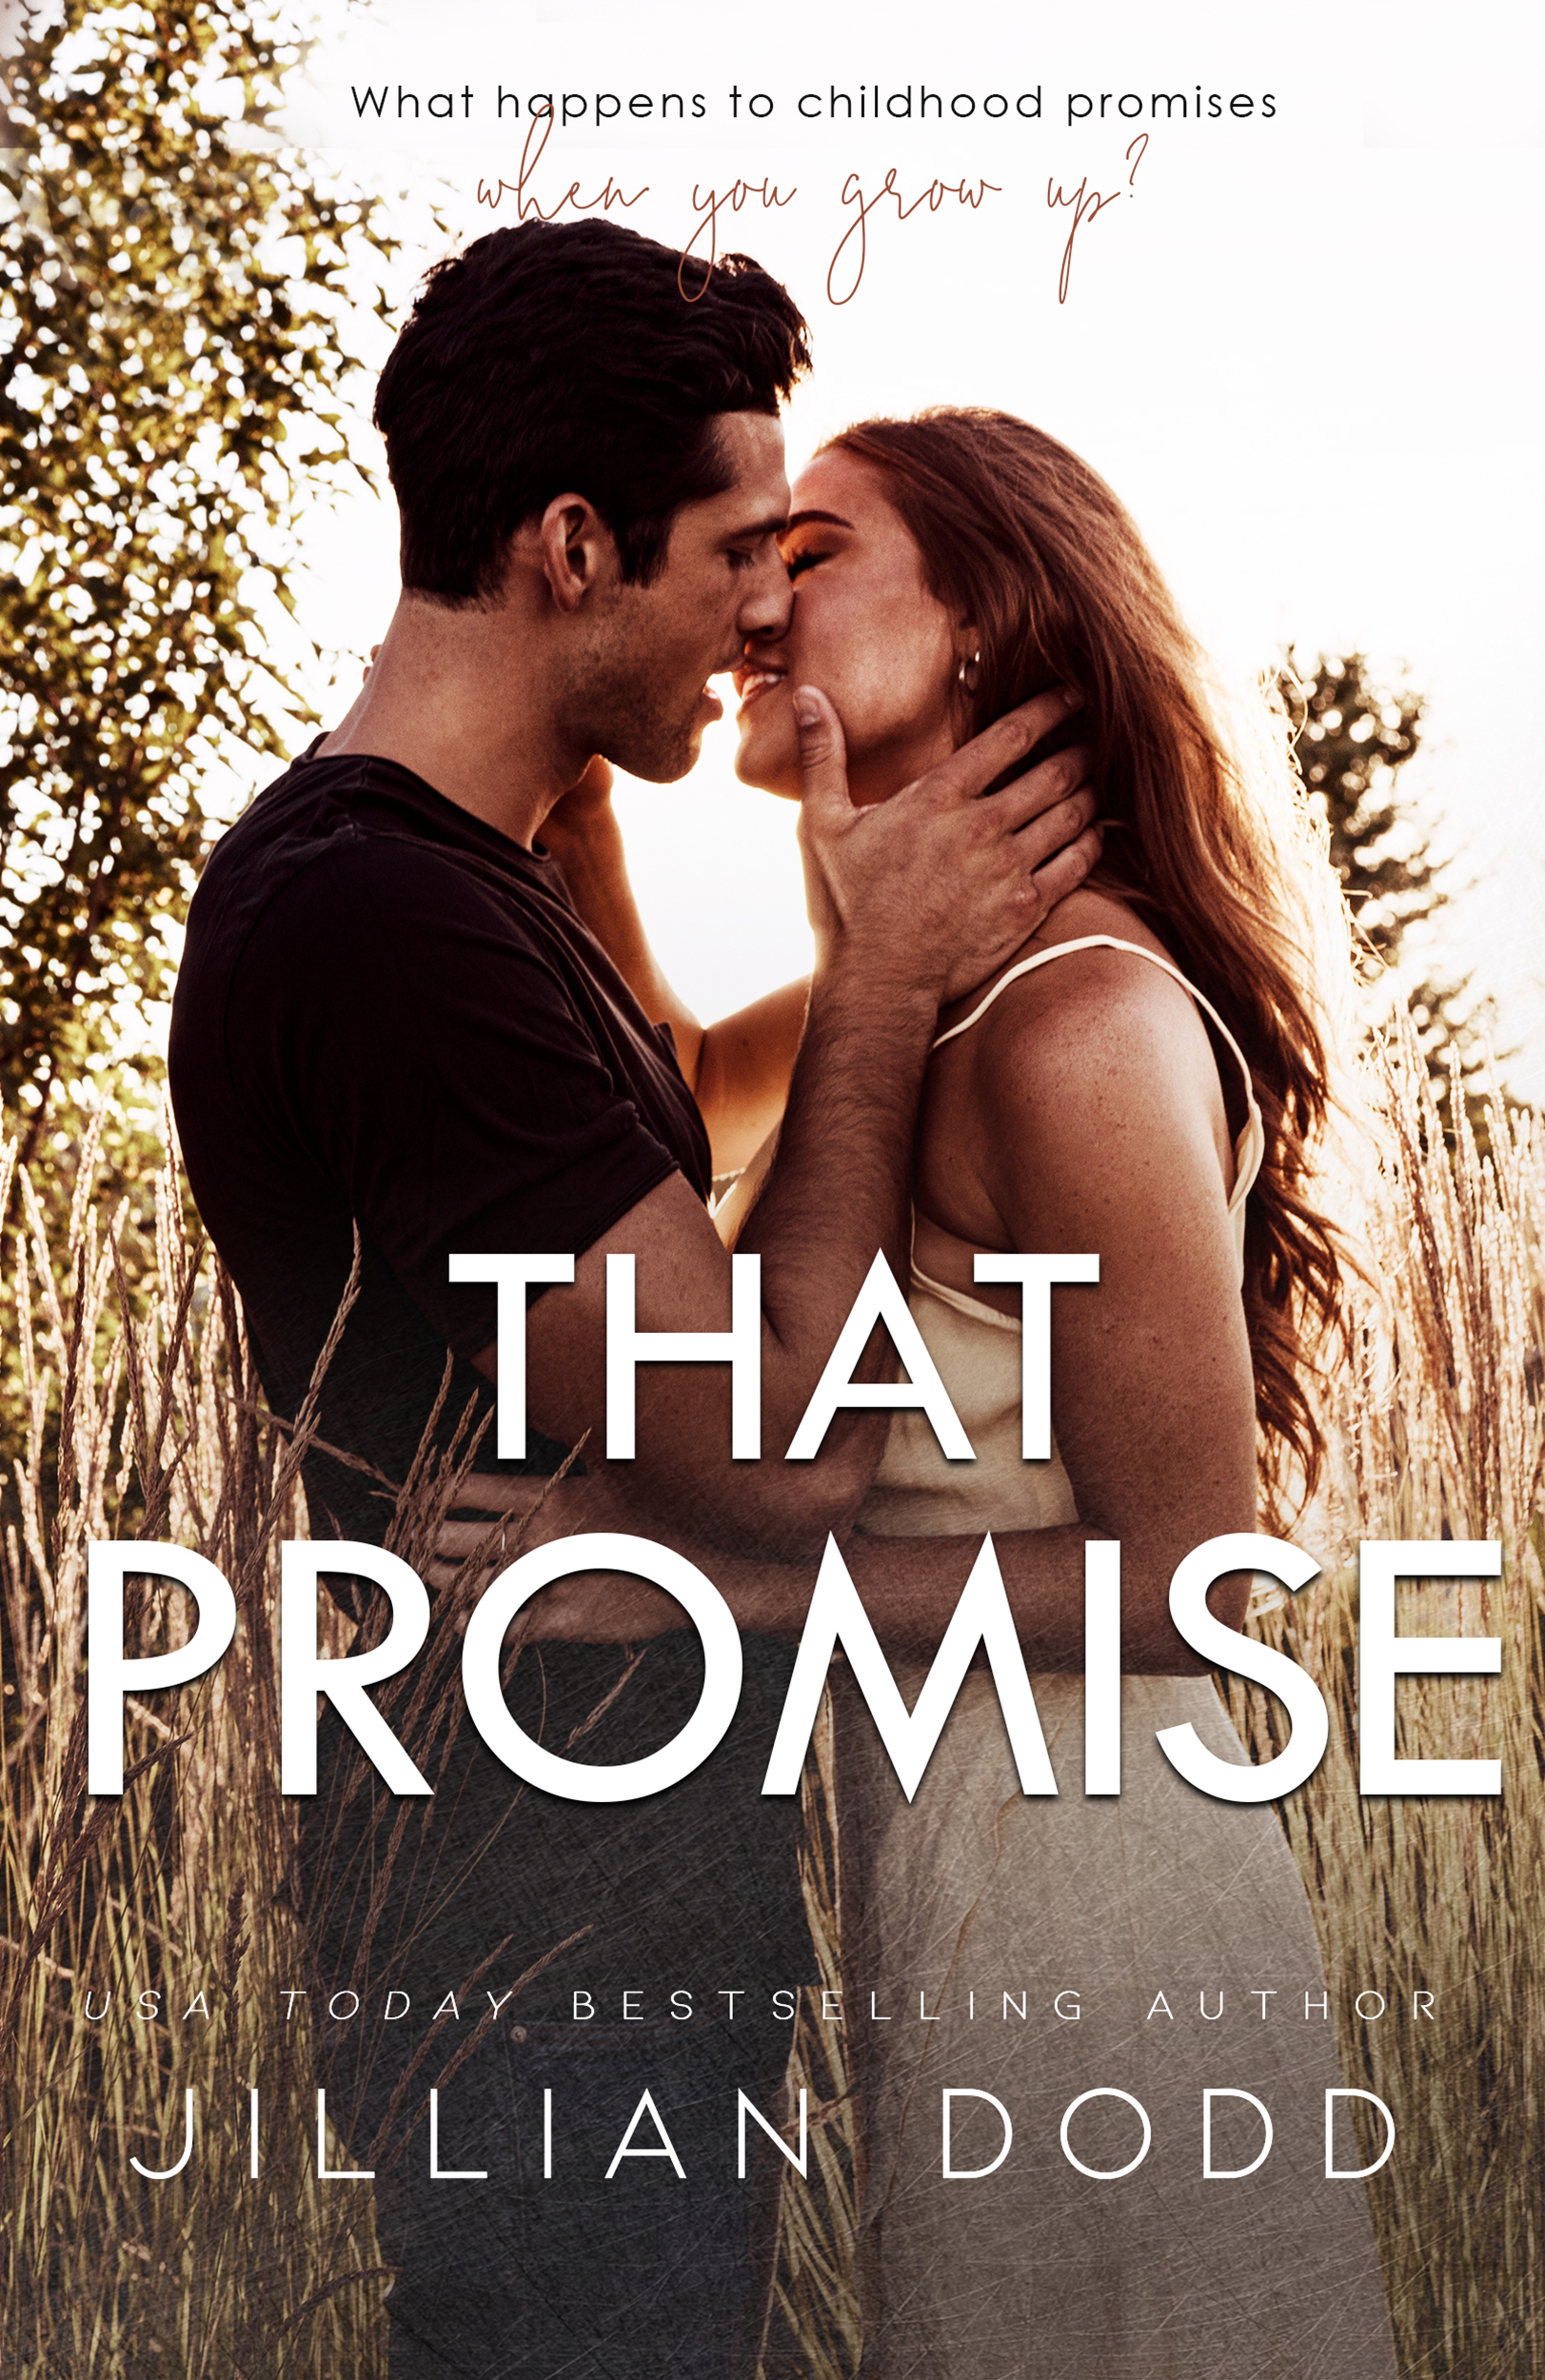 [EPUB] That Boy #7 That Promise by Jillian Dodd